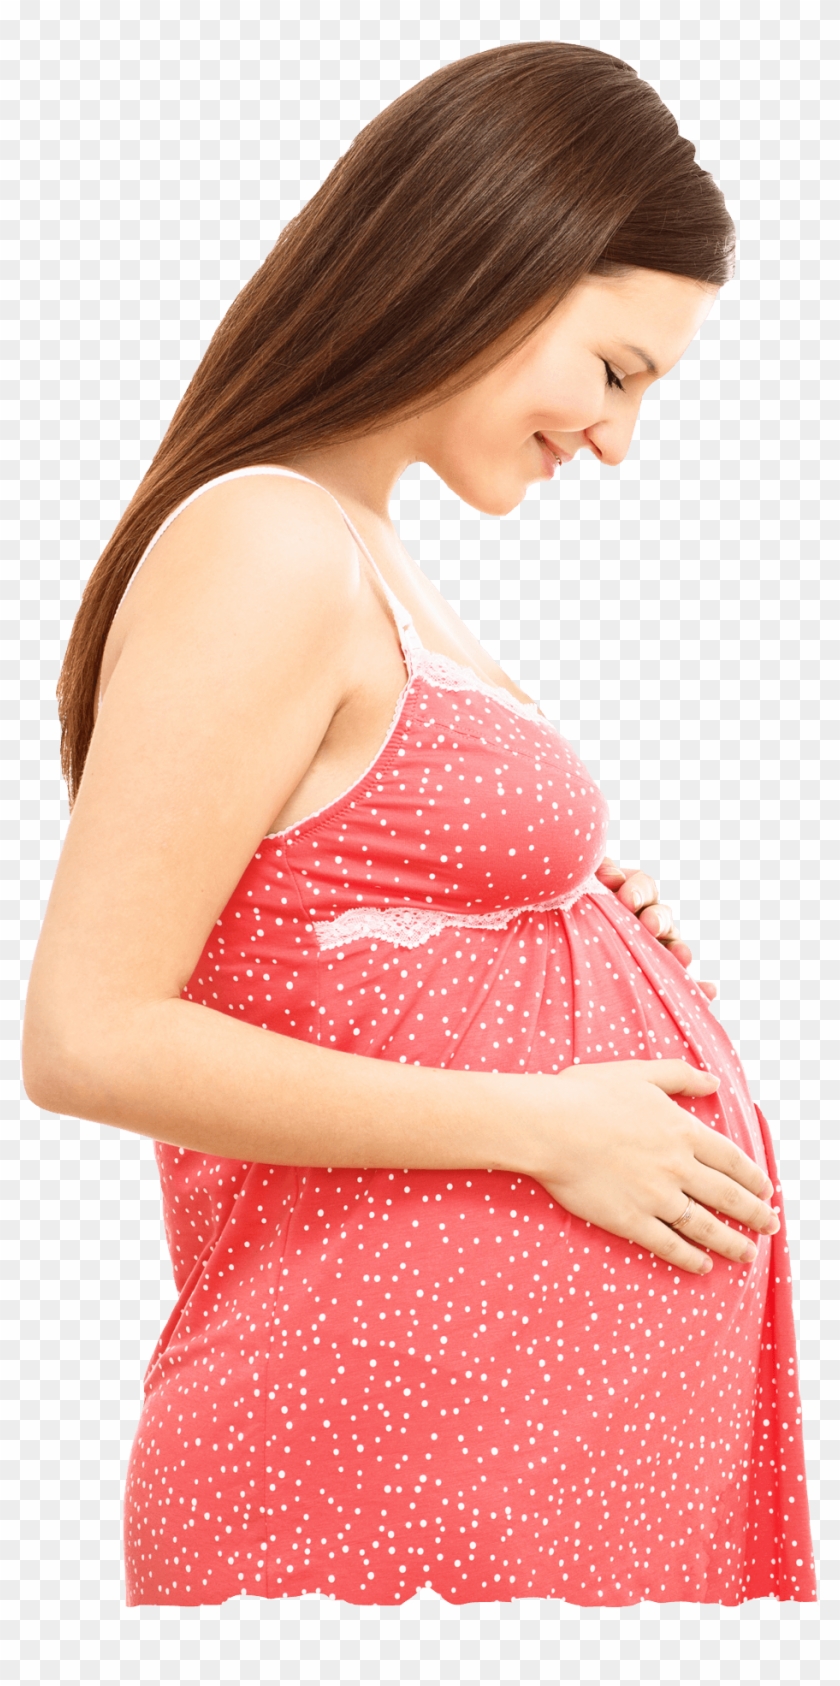 Pregnant Women Png - Pregnant Woman Png Clipart #548327